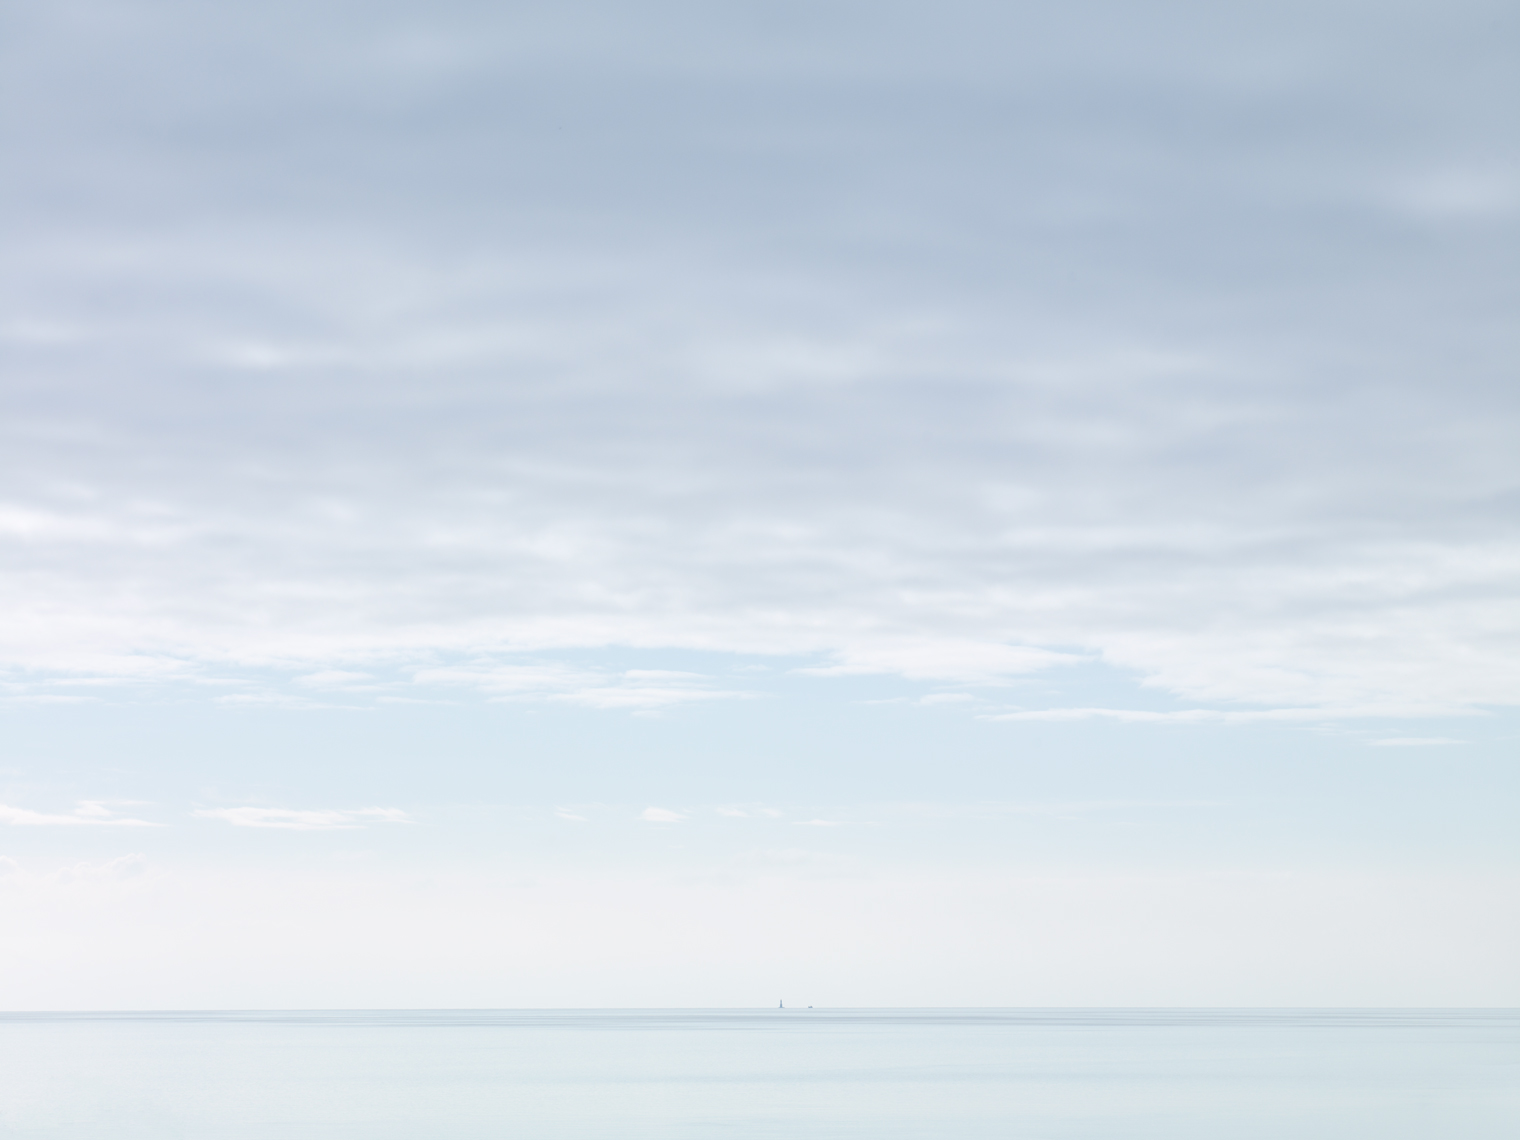 Jon Wyatt Photography - Sound of Jura I - seascape of the Sound of Jura looking towards the Scottish mainland